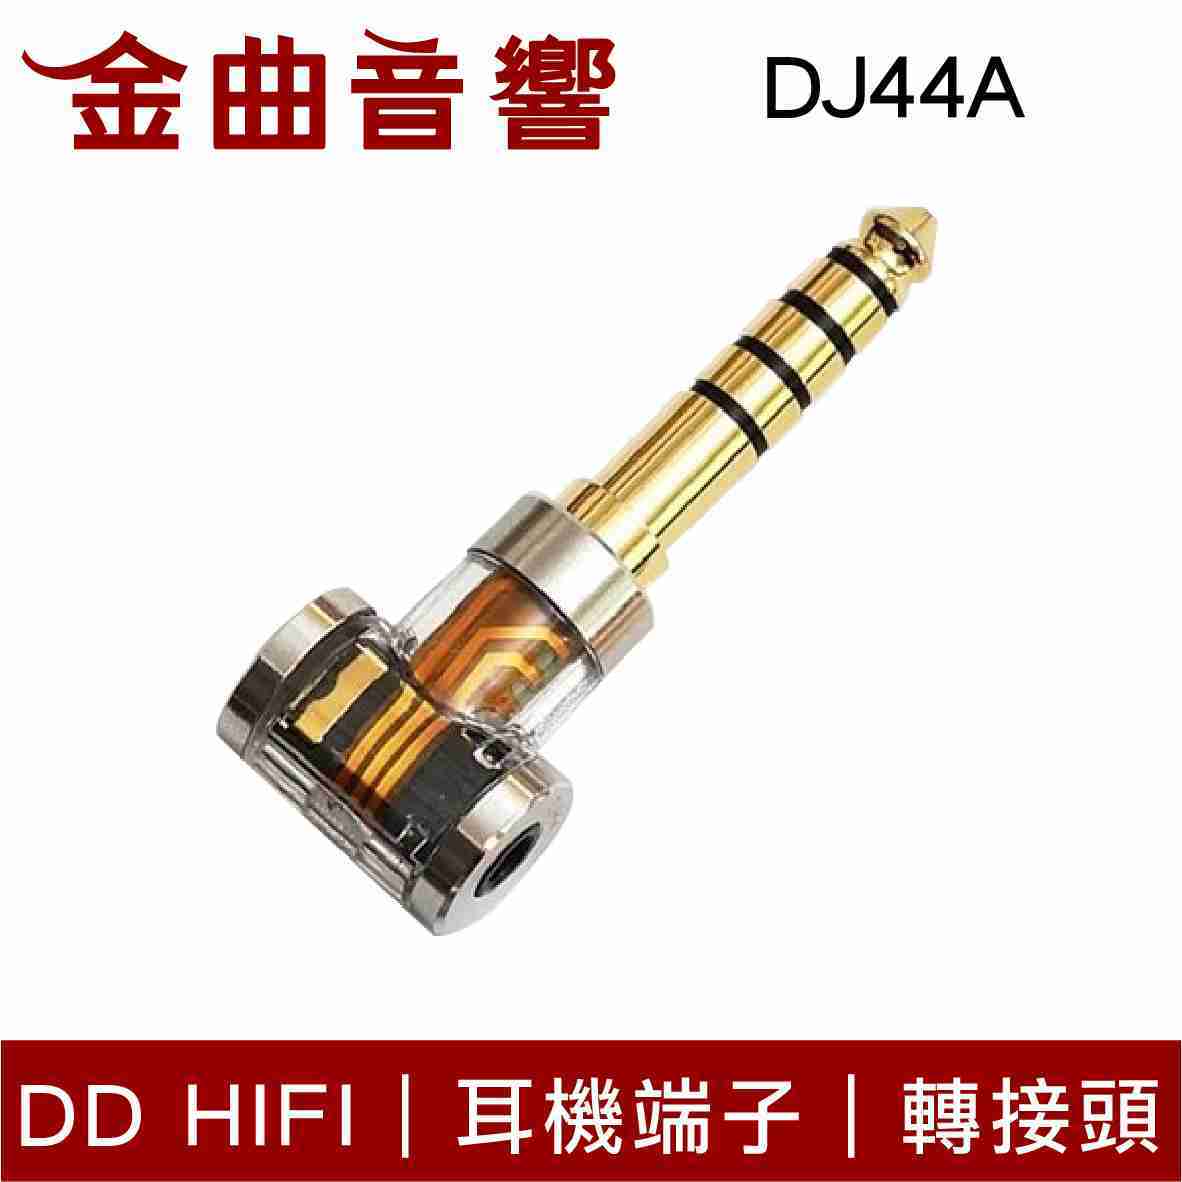 DD Hifi DJ44A 耳機端子 轉接頭 適用2.5mm平衡接頭 | 金曲音響